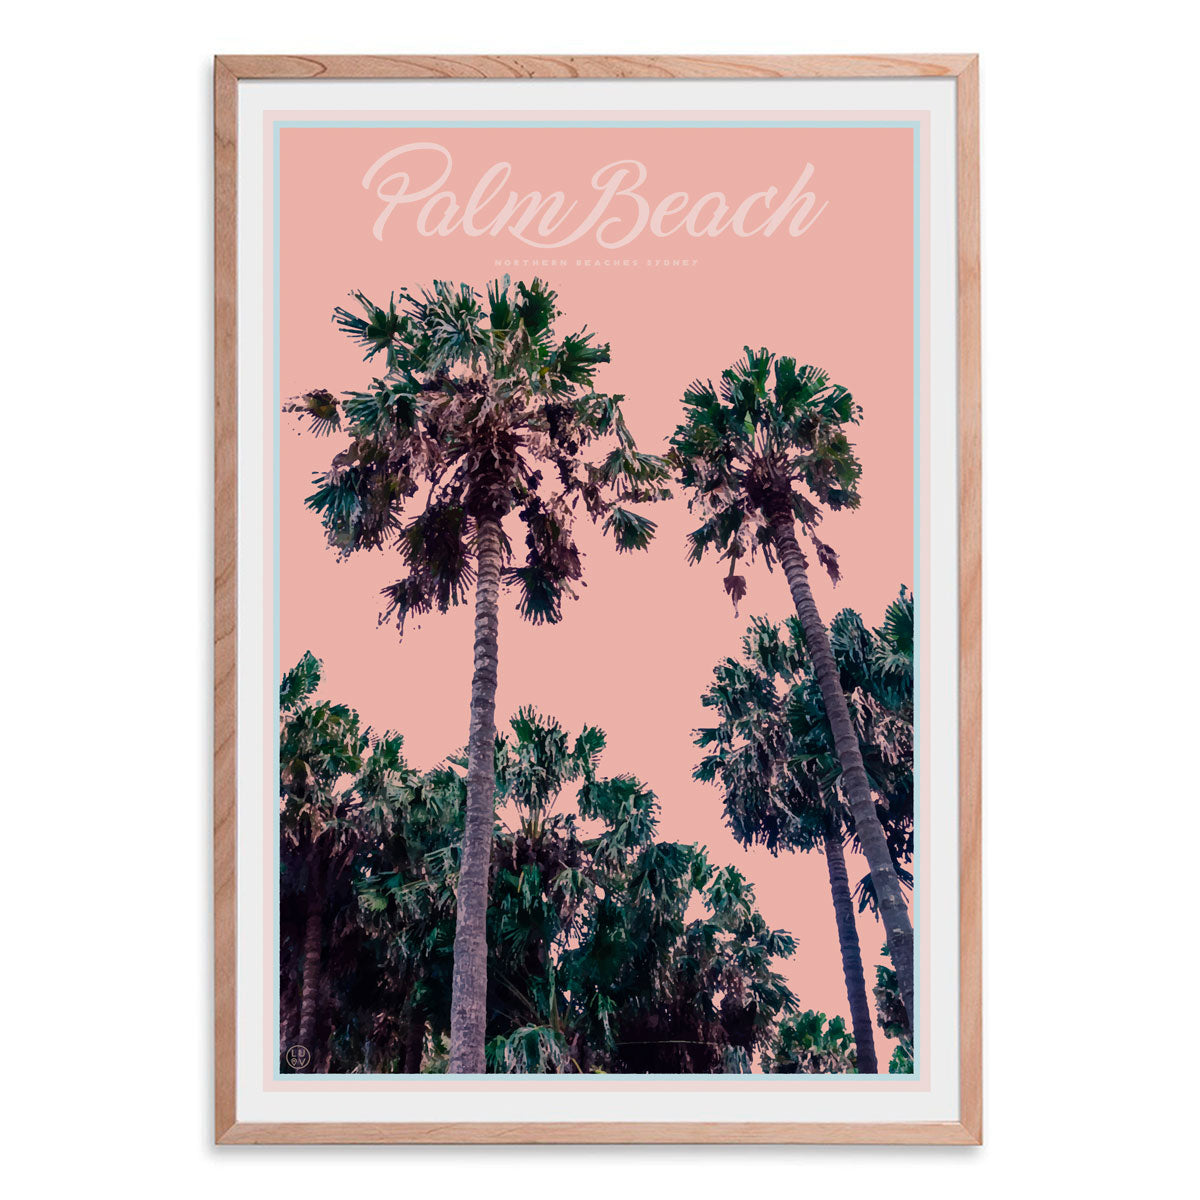 Palm Beach Palms - Sydney - original design print by Placesweluv 